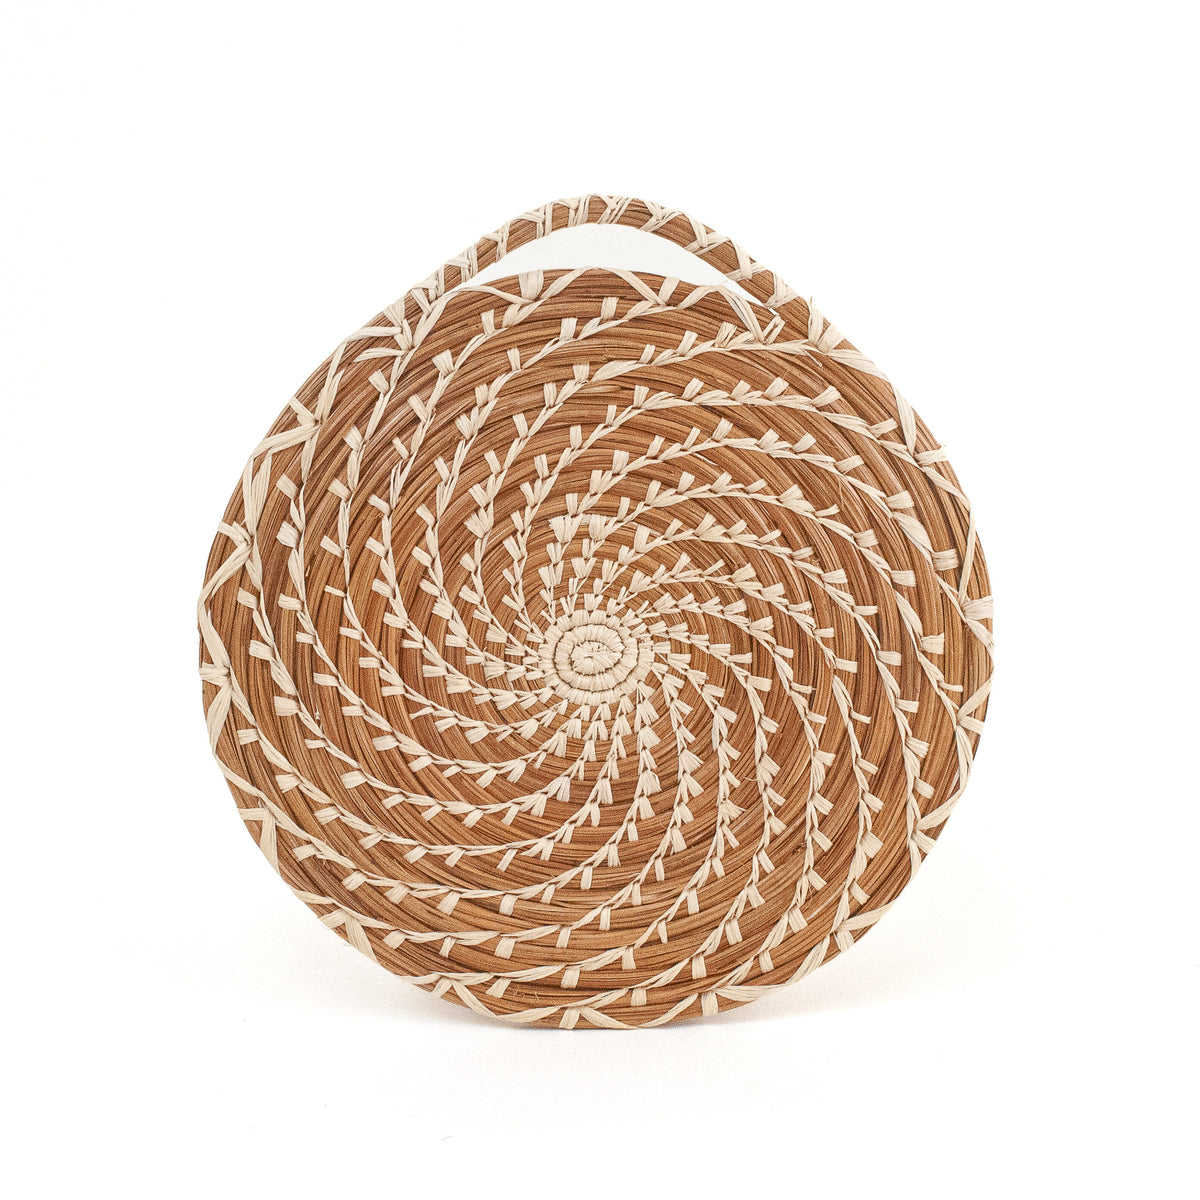 Pine needle trivet with spiral design